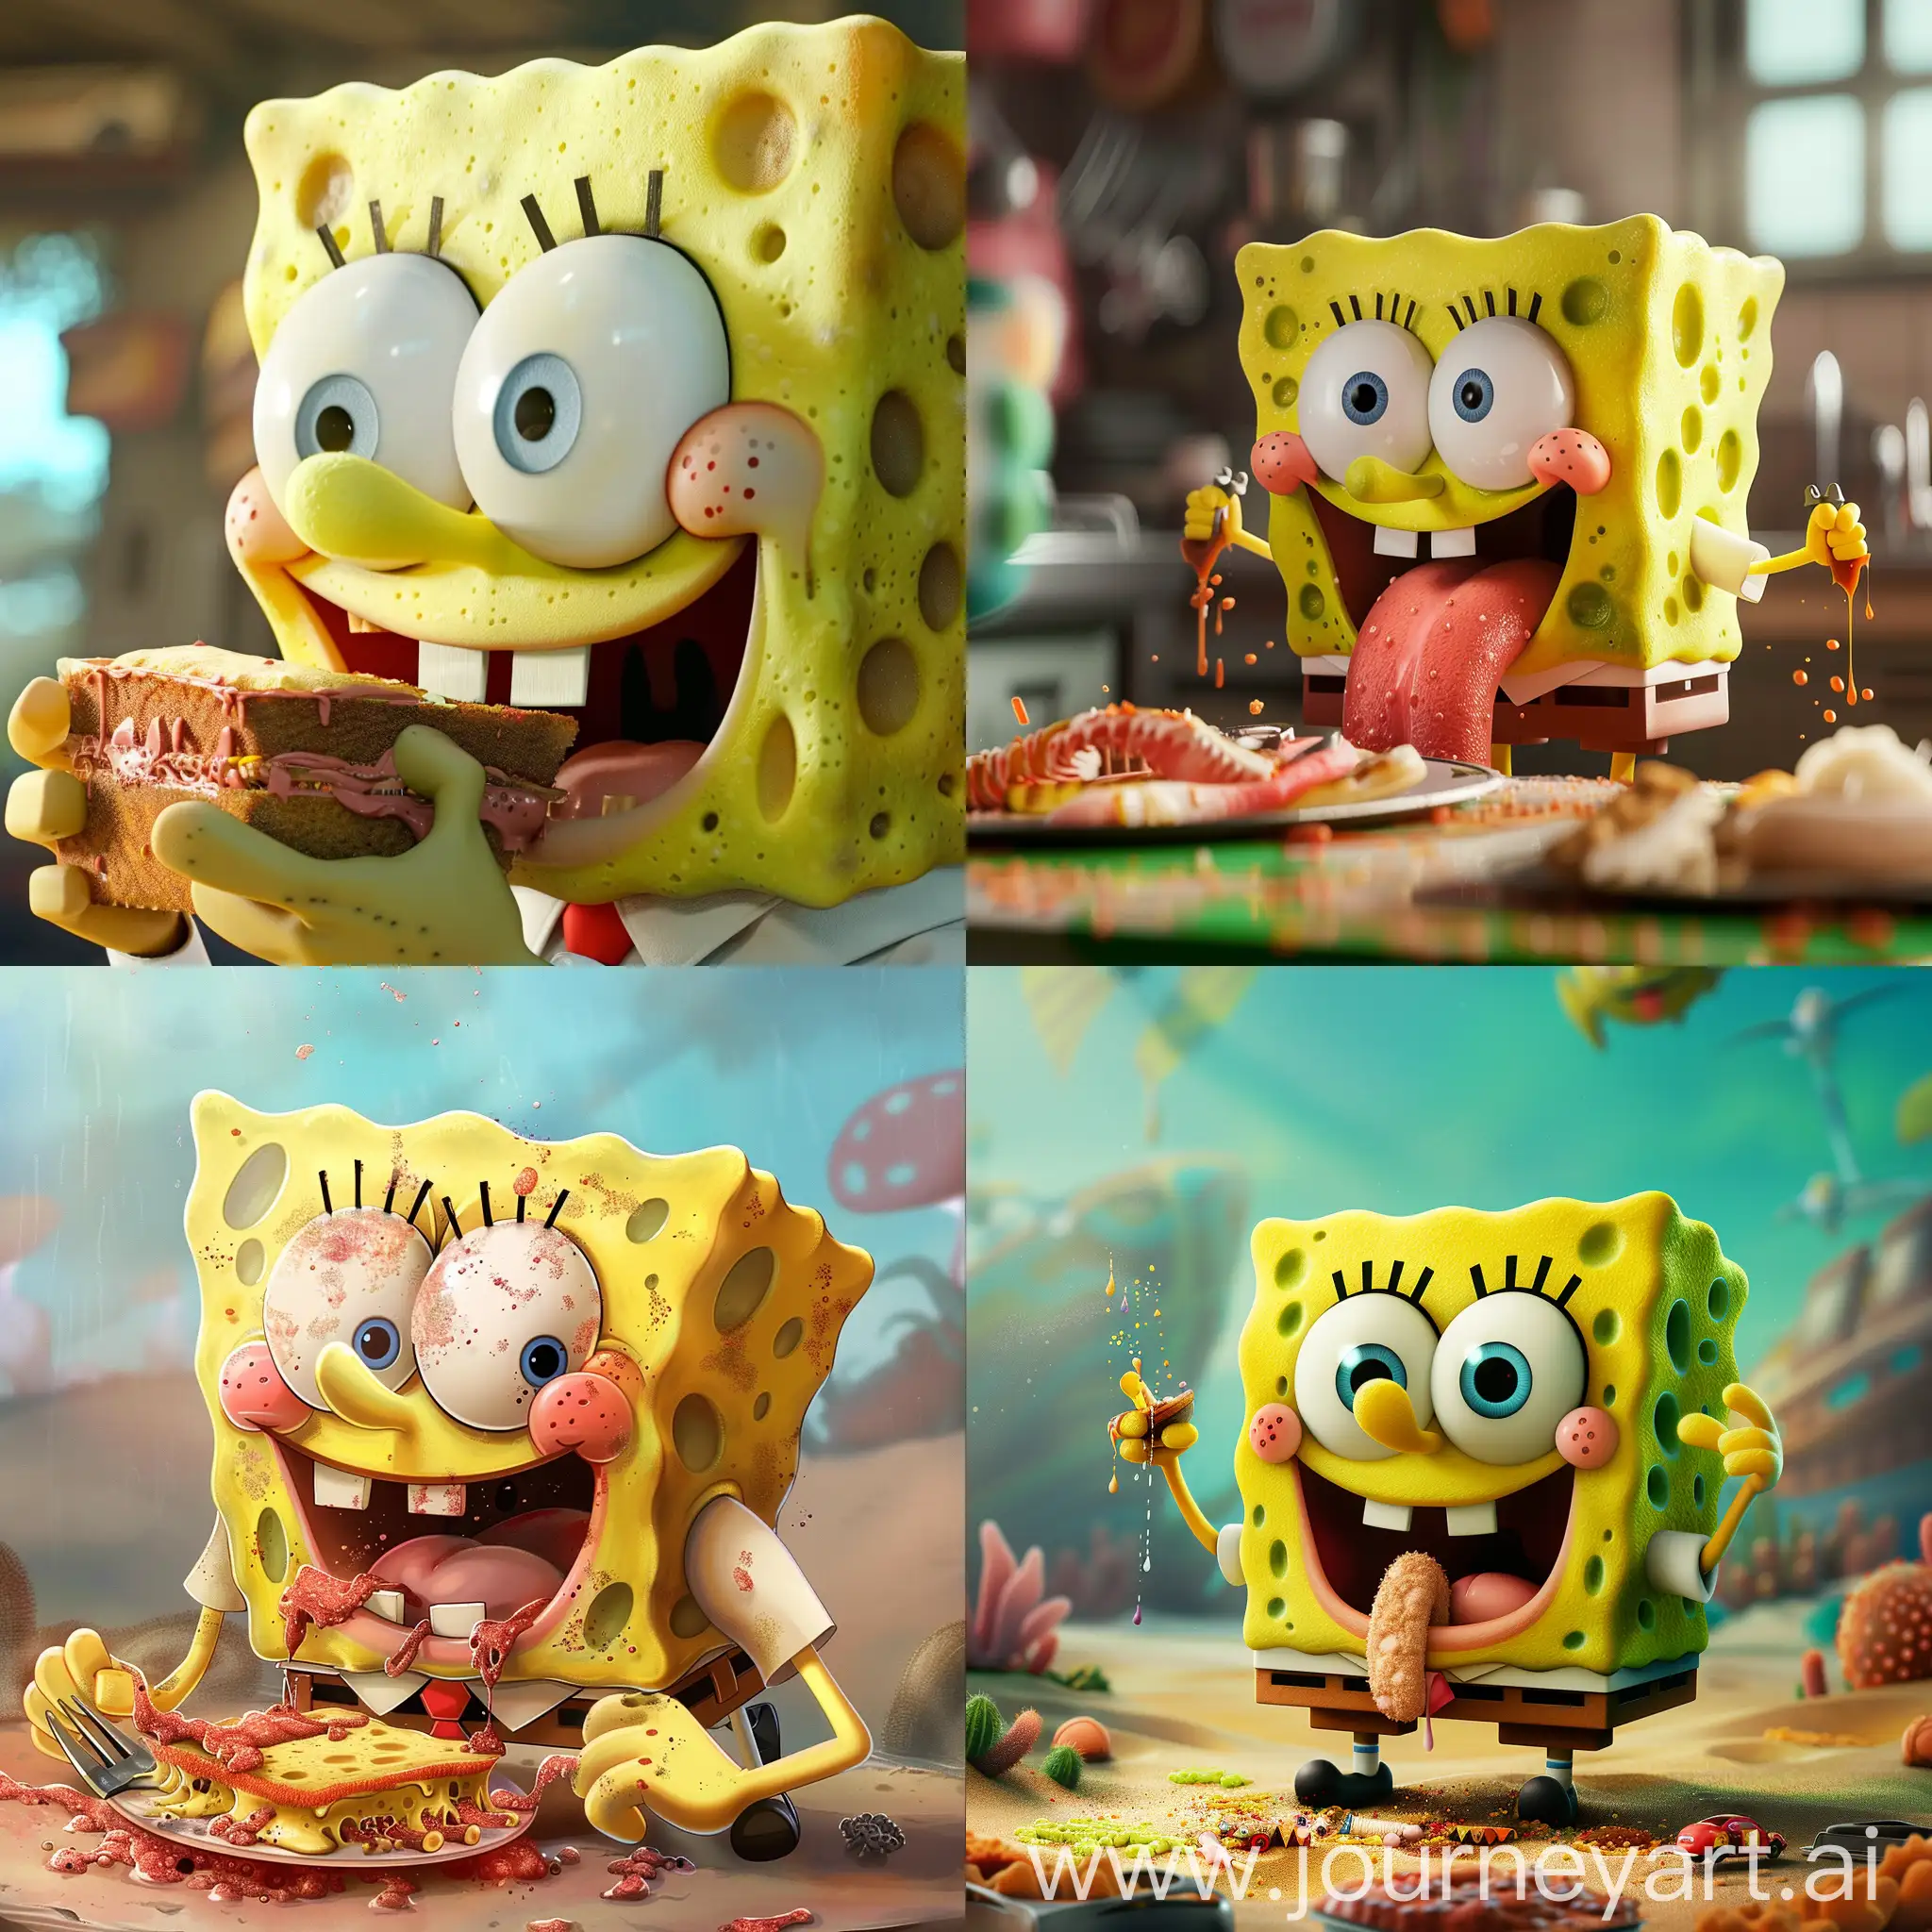 The sound of SpongeBob eating Patrick